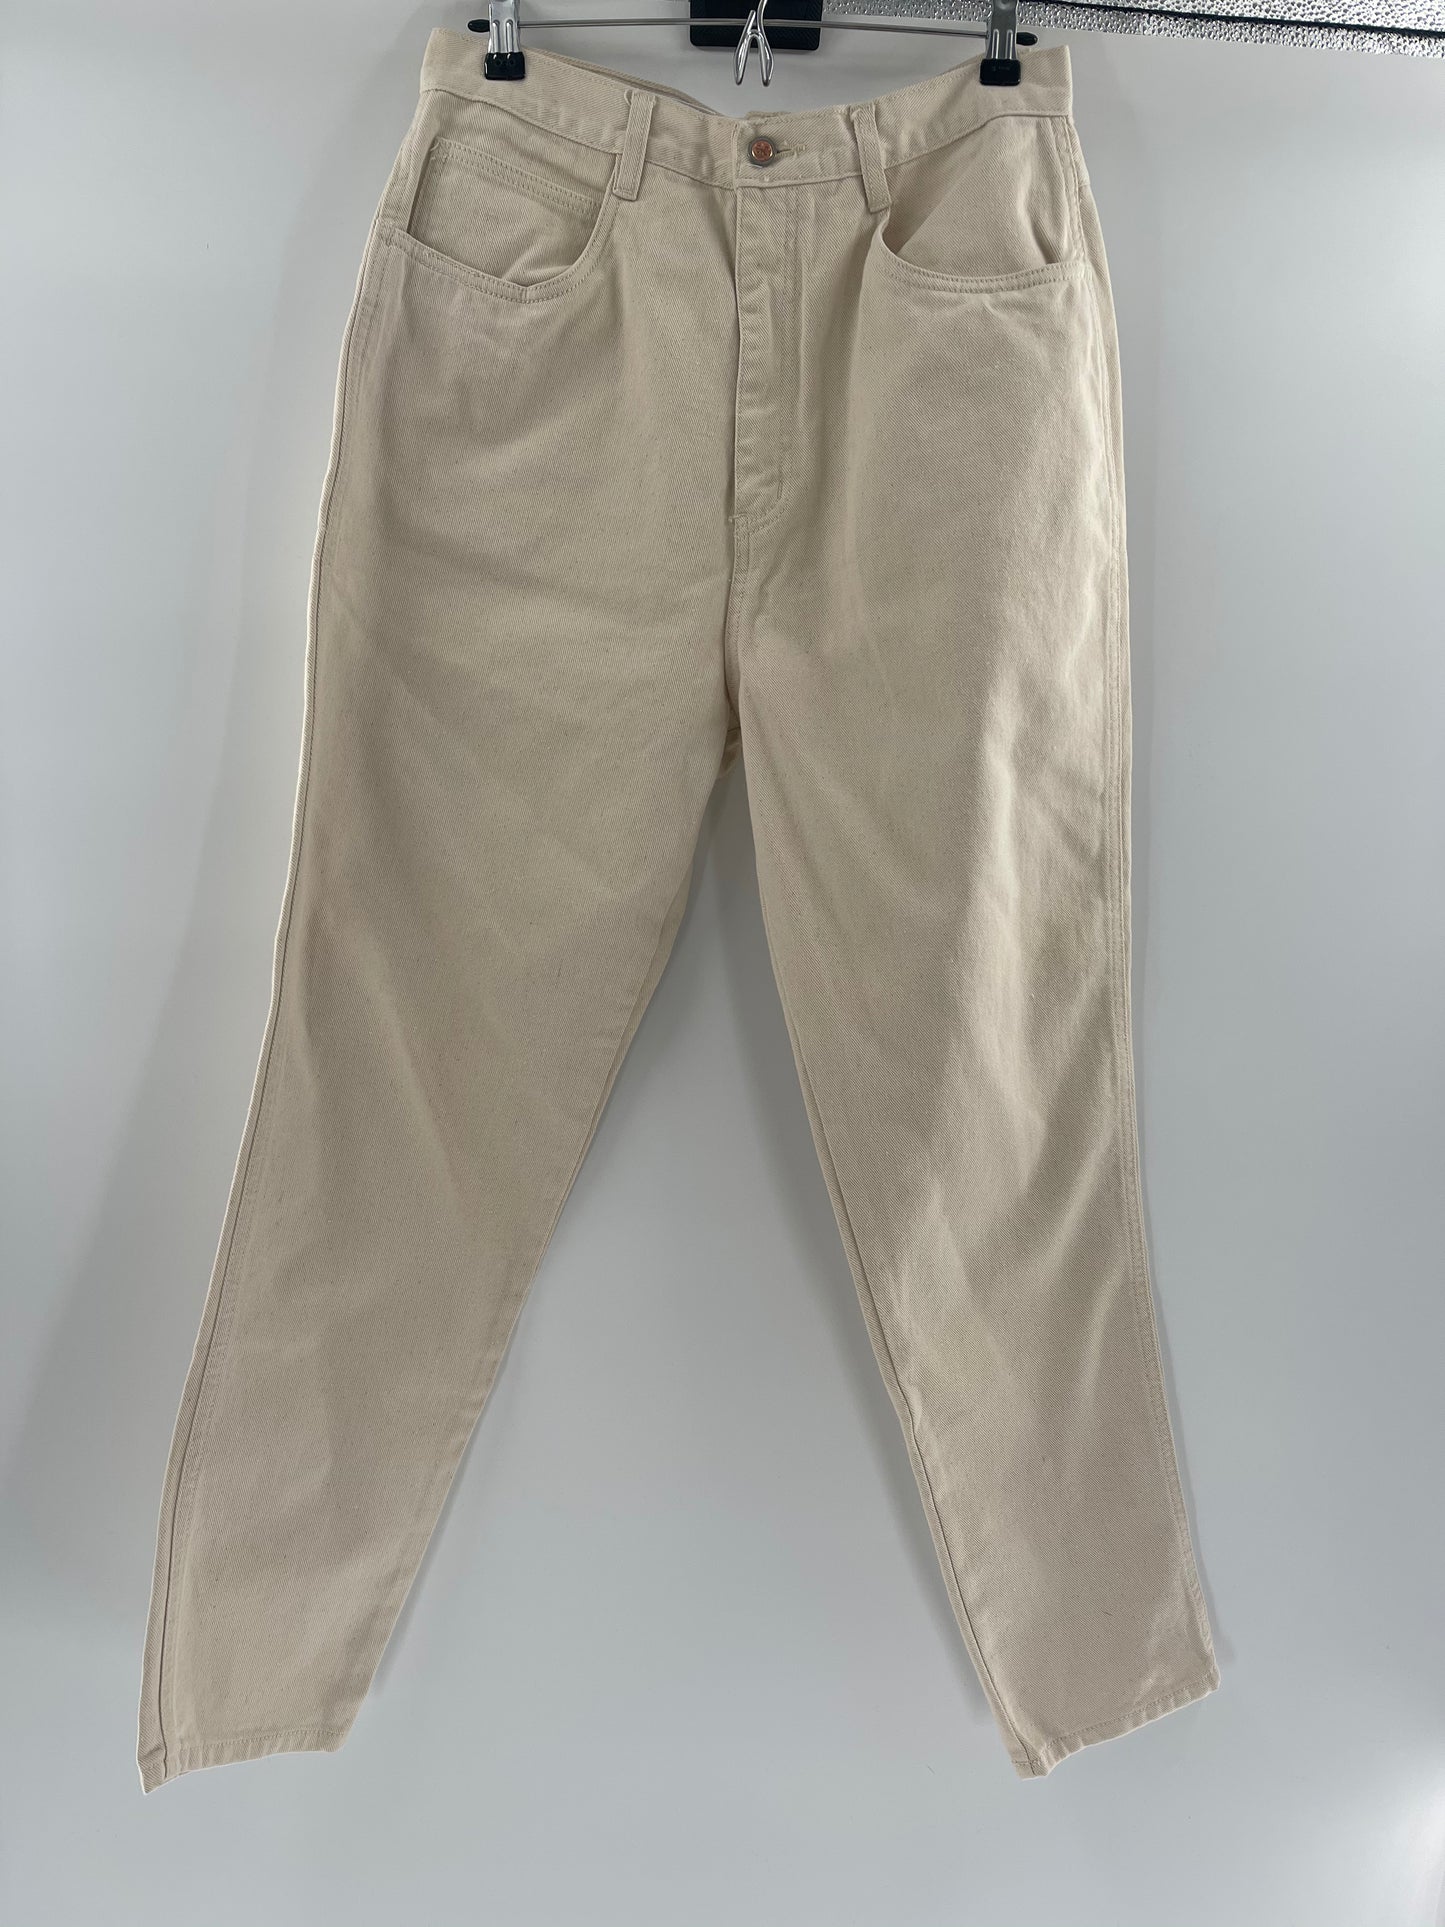 Bill Blass 90’s Off-White jeans (Size 14)